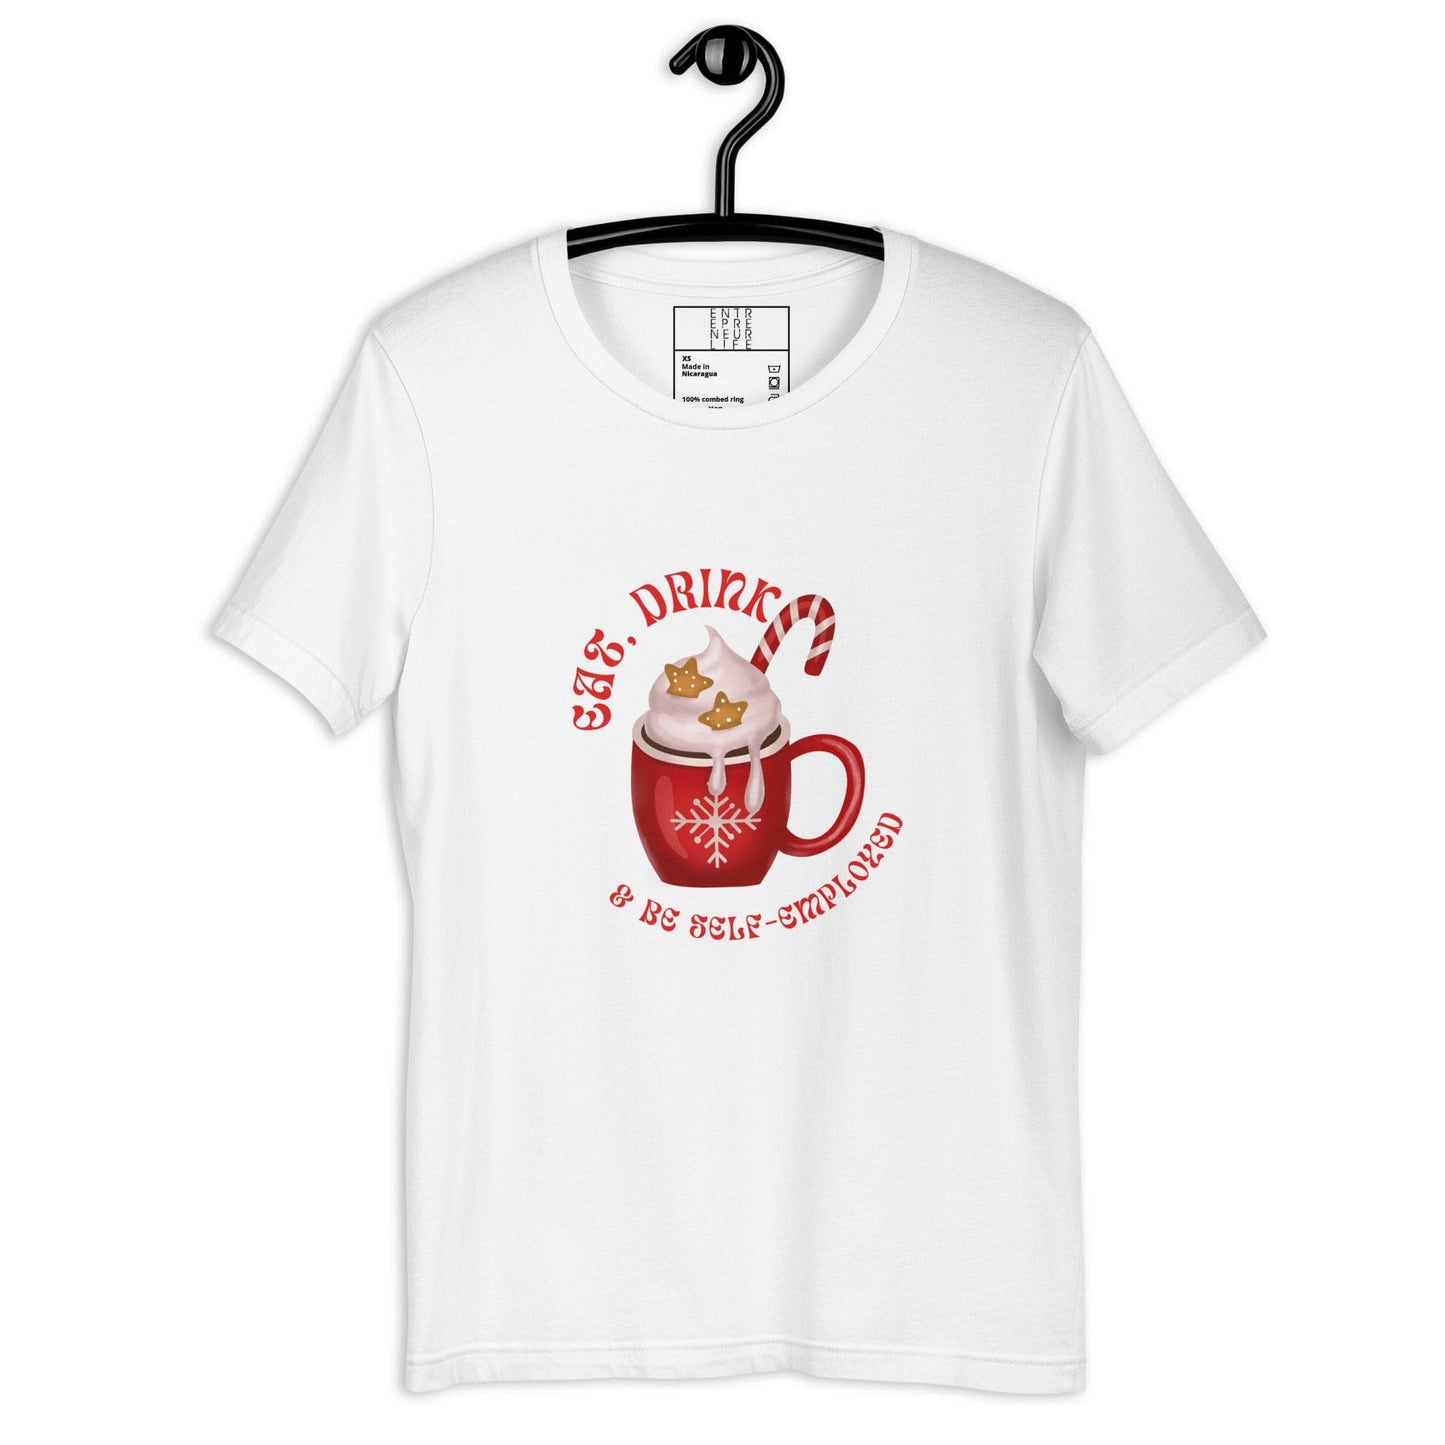 Eat, Drink, & BE Self-Employed Unisex t-shirt